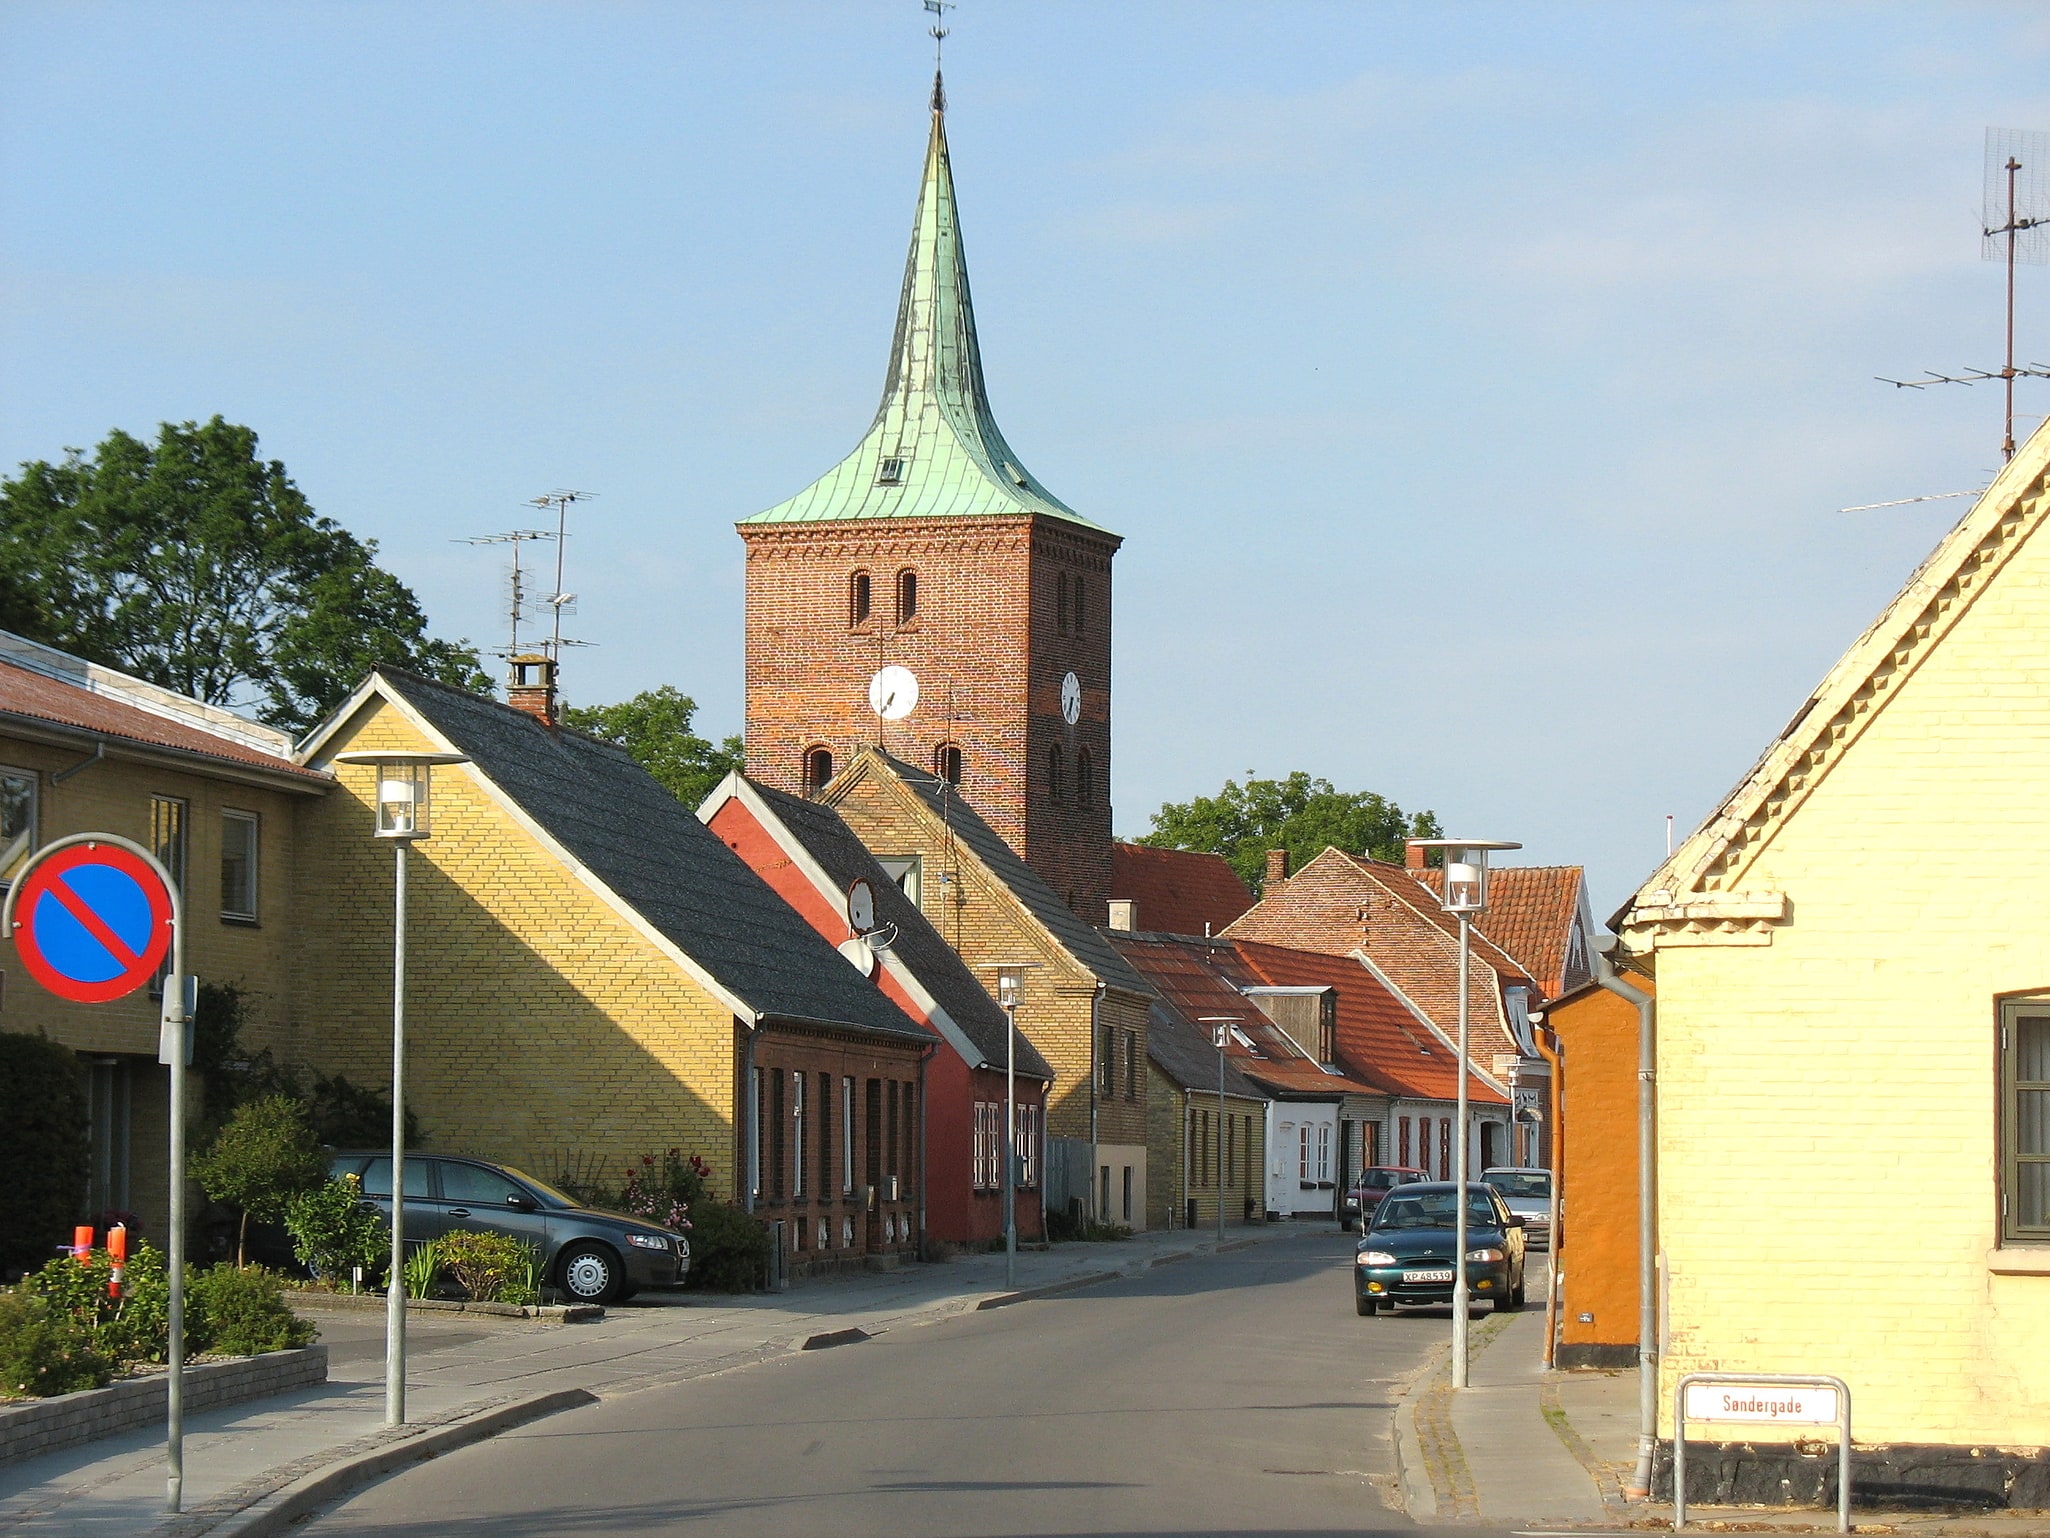 Rødby, Denmark